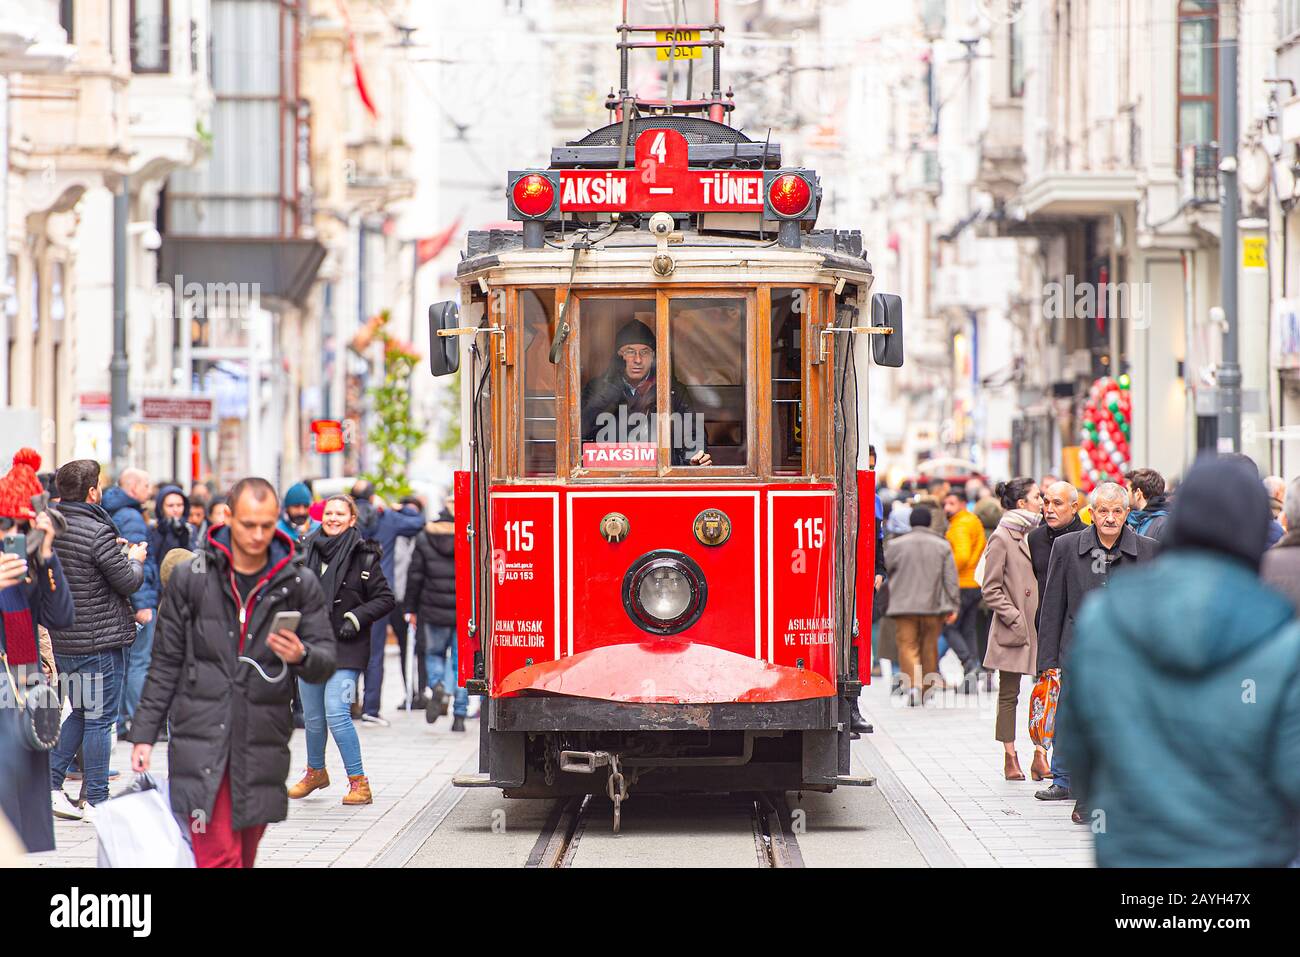 Istanbul - 1. JANUAR: Berühmte rote Straßenbahn auf dem Taksim-Platz und der Istiklal-Straße in Istanbul am 01. Januar. 2020 in der Türkei Stockfoto